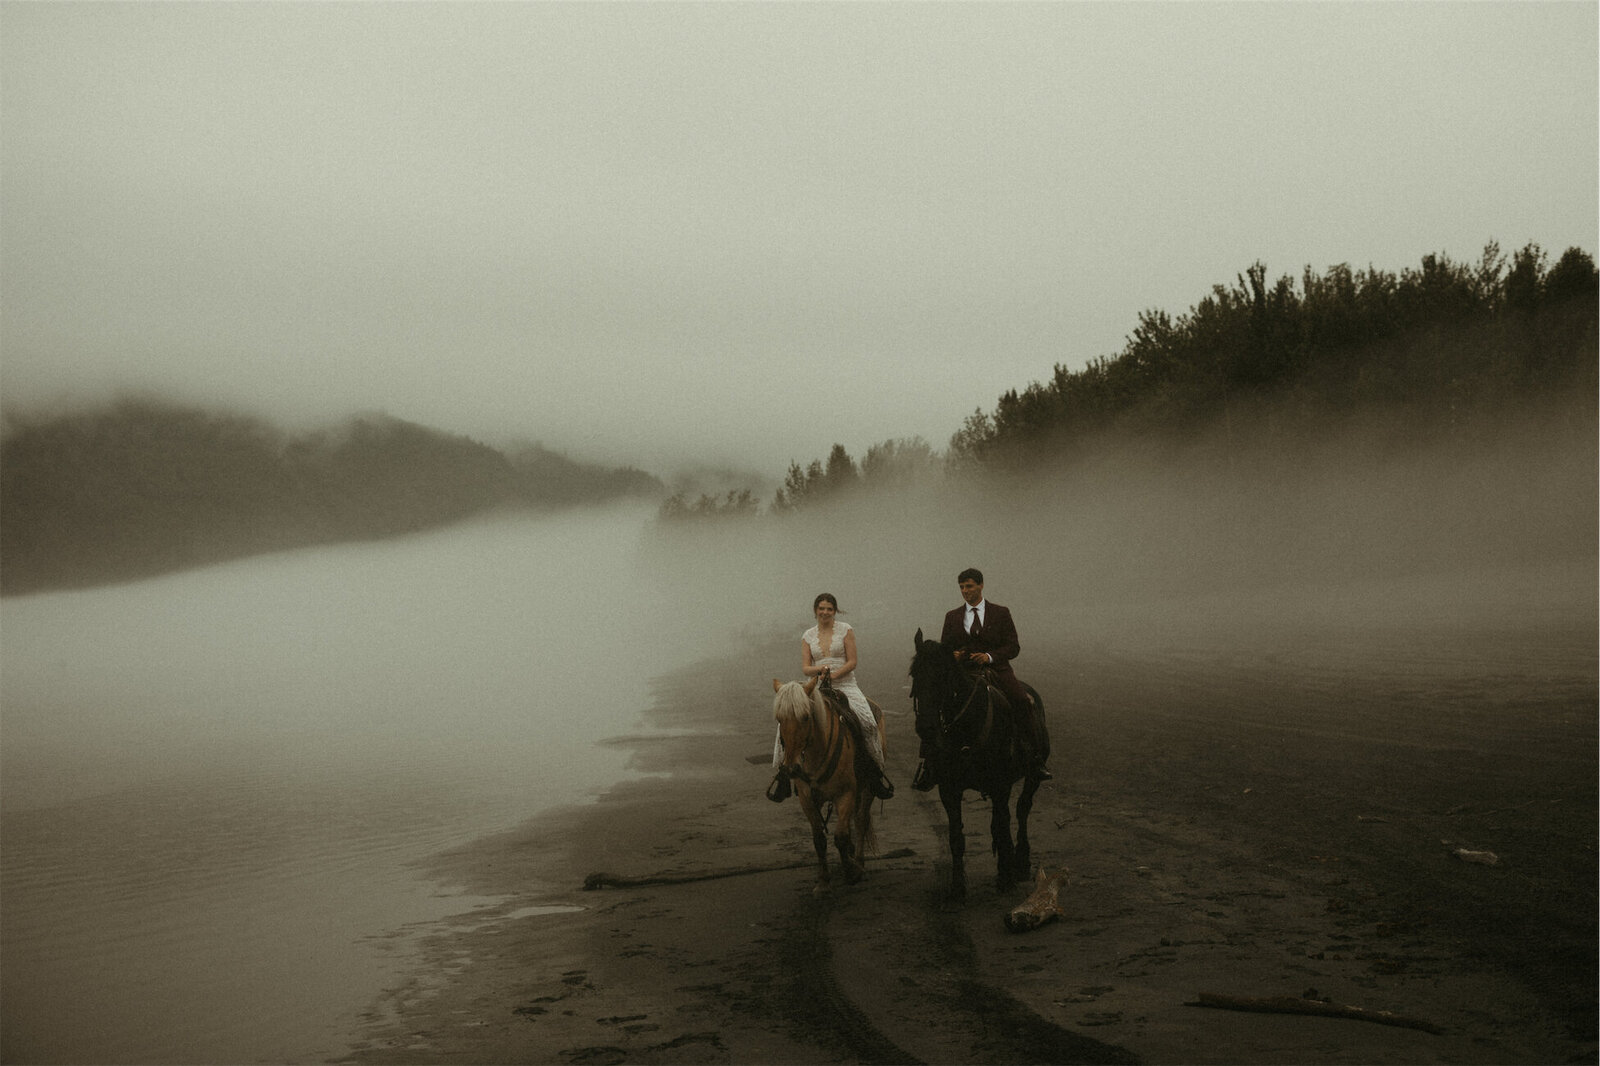 Couple in wedding attire walking across a foggy beach in Palmer, Alaska